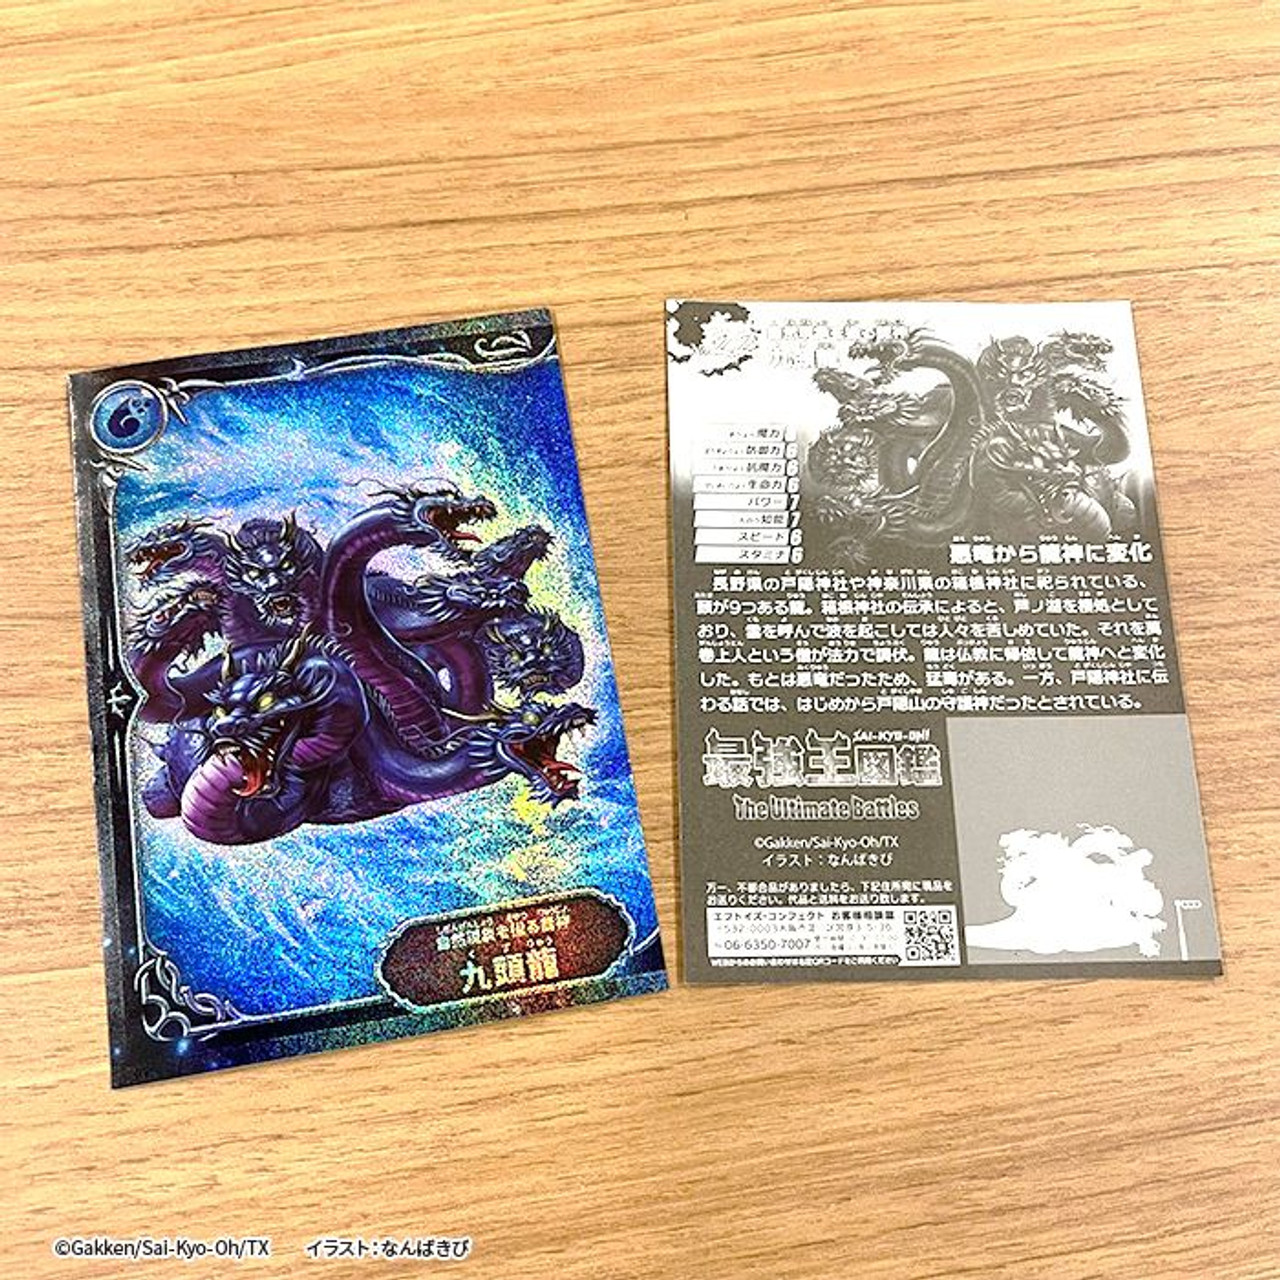 Sai-Kyo-Oh! Zukan - The Ultimate Battles Holo Dragon Sticker 